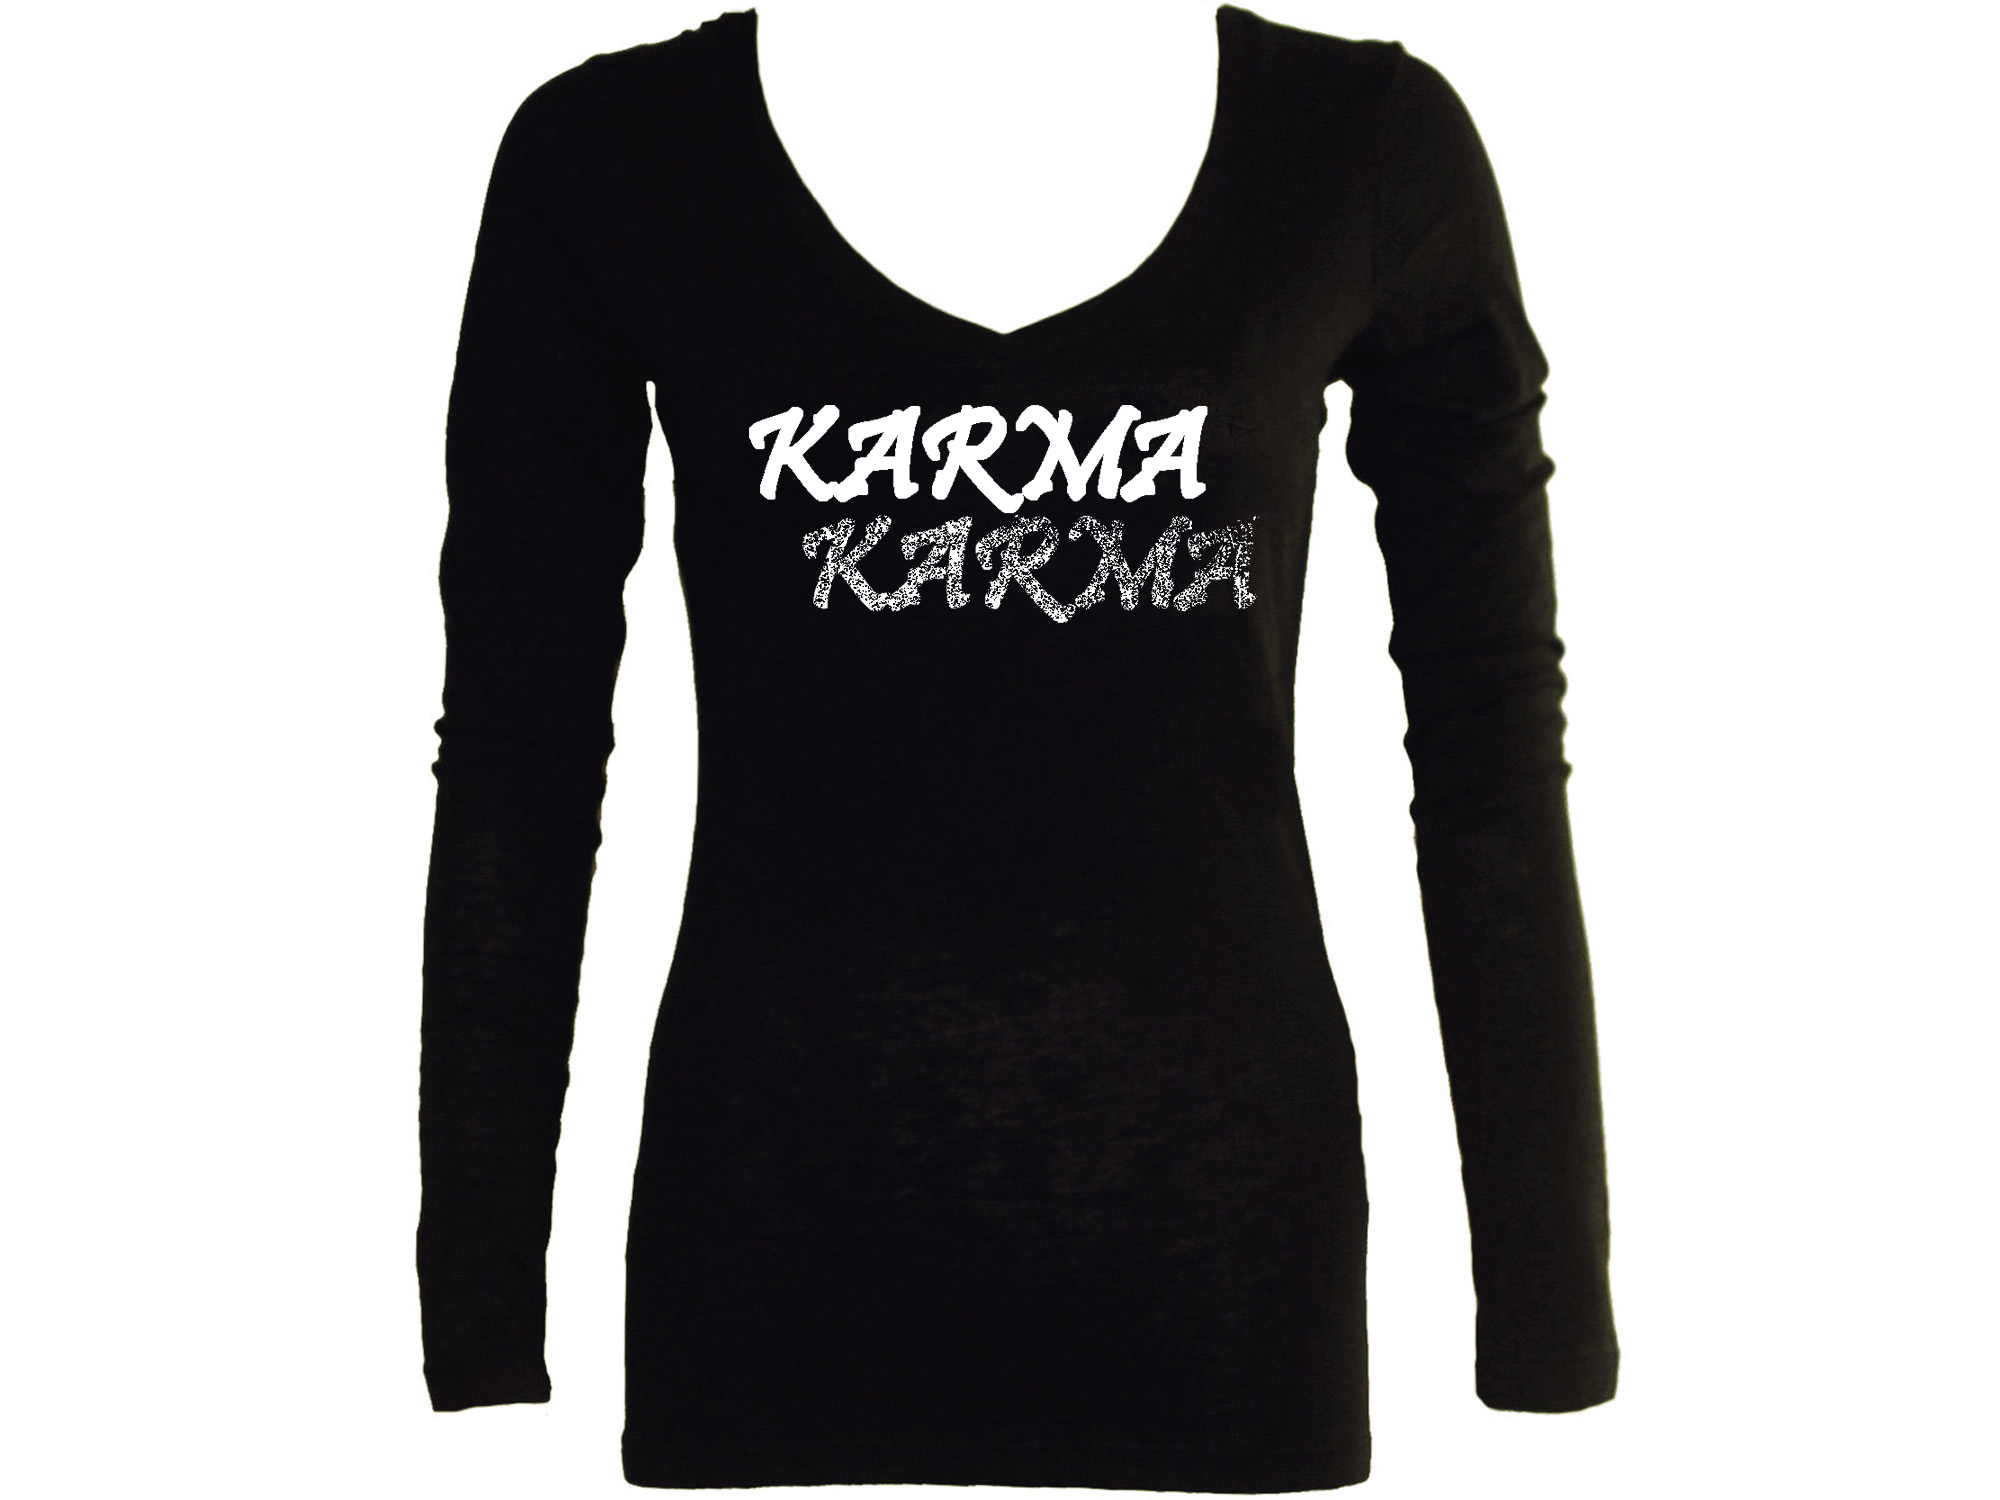 Karma yoga wear meditation woman/teens sleeved black t shirt